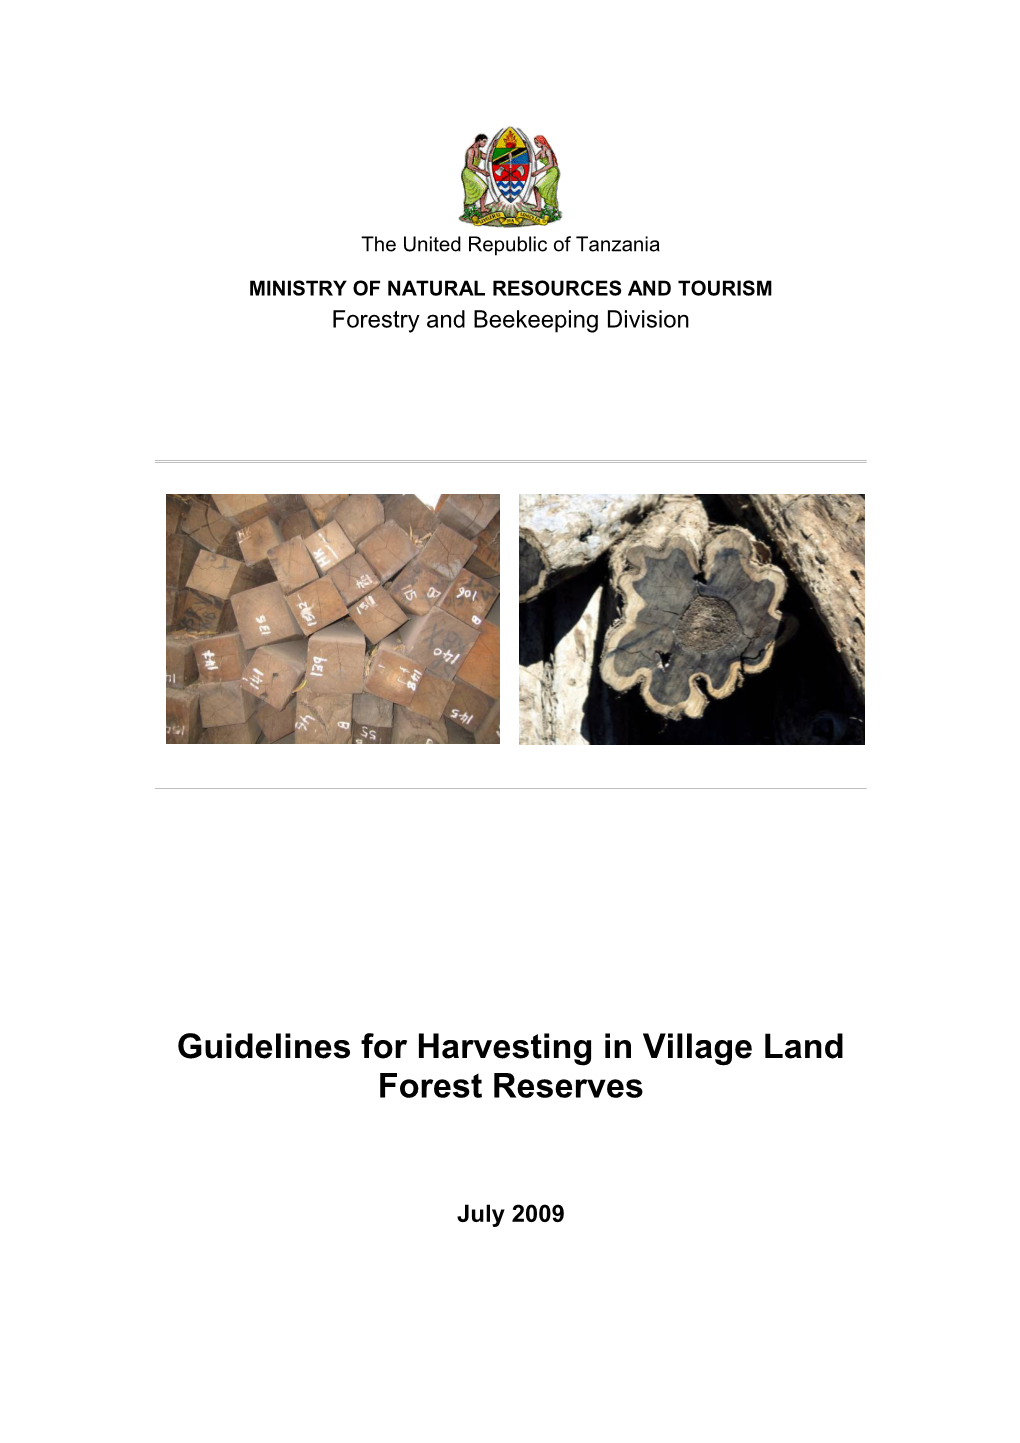 Guidelines for Forest Harvesting in Village Land Forest Reserves